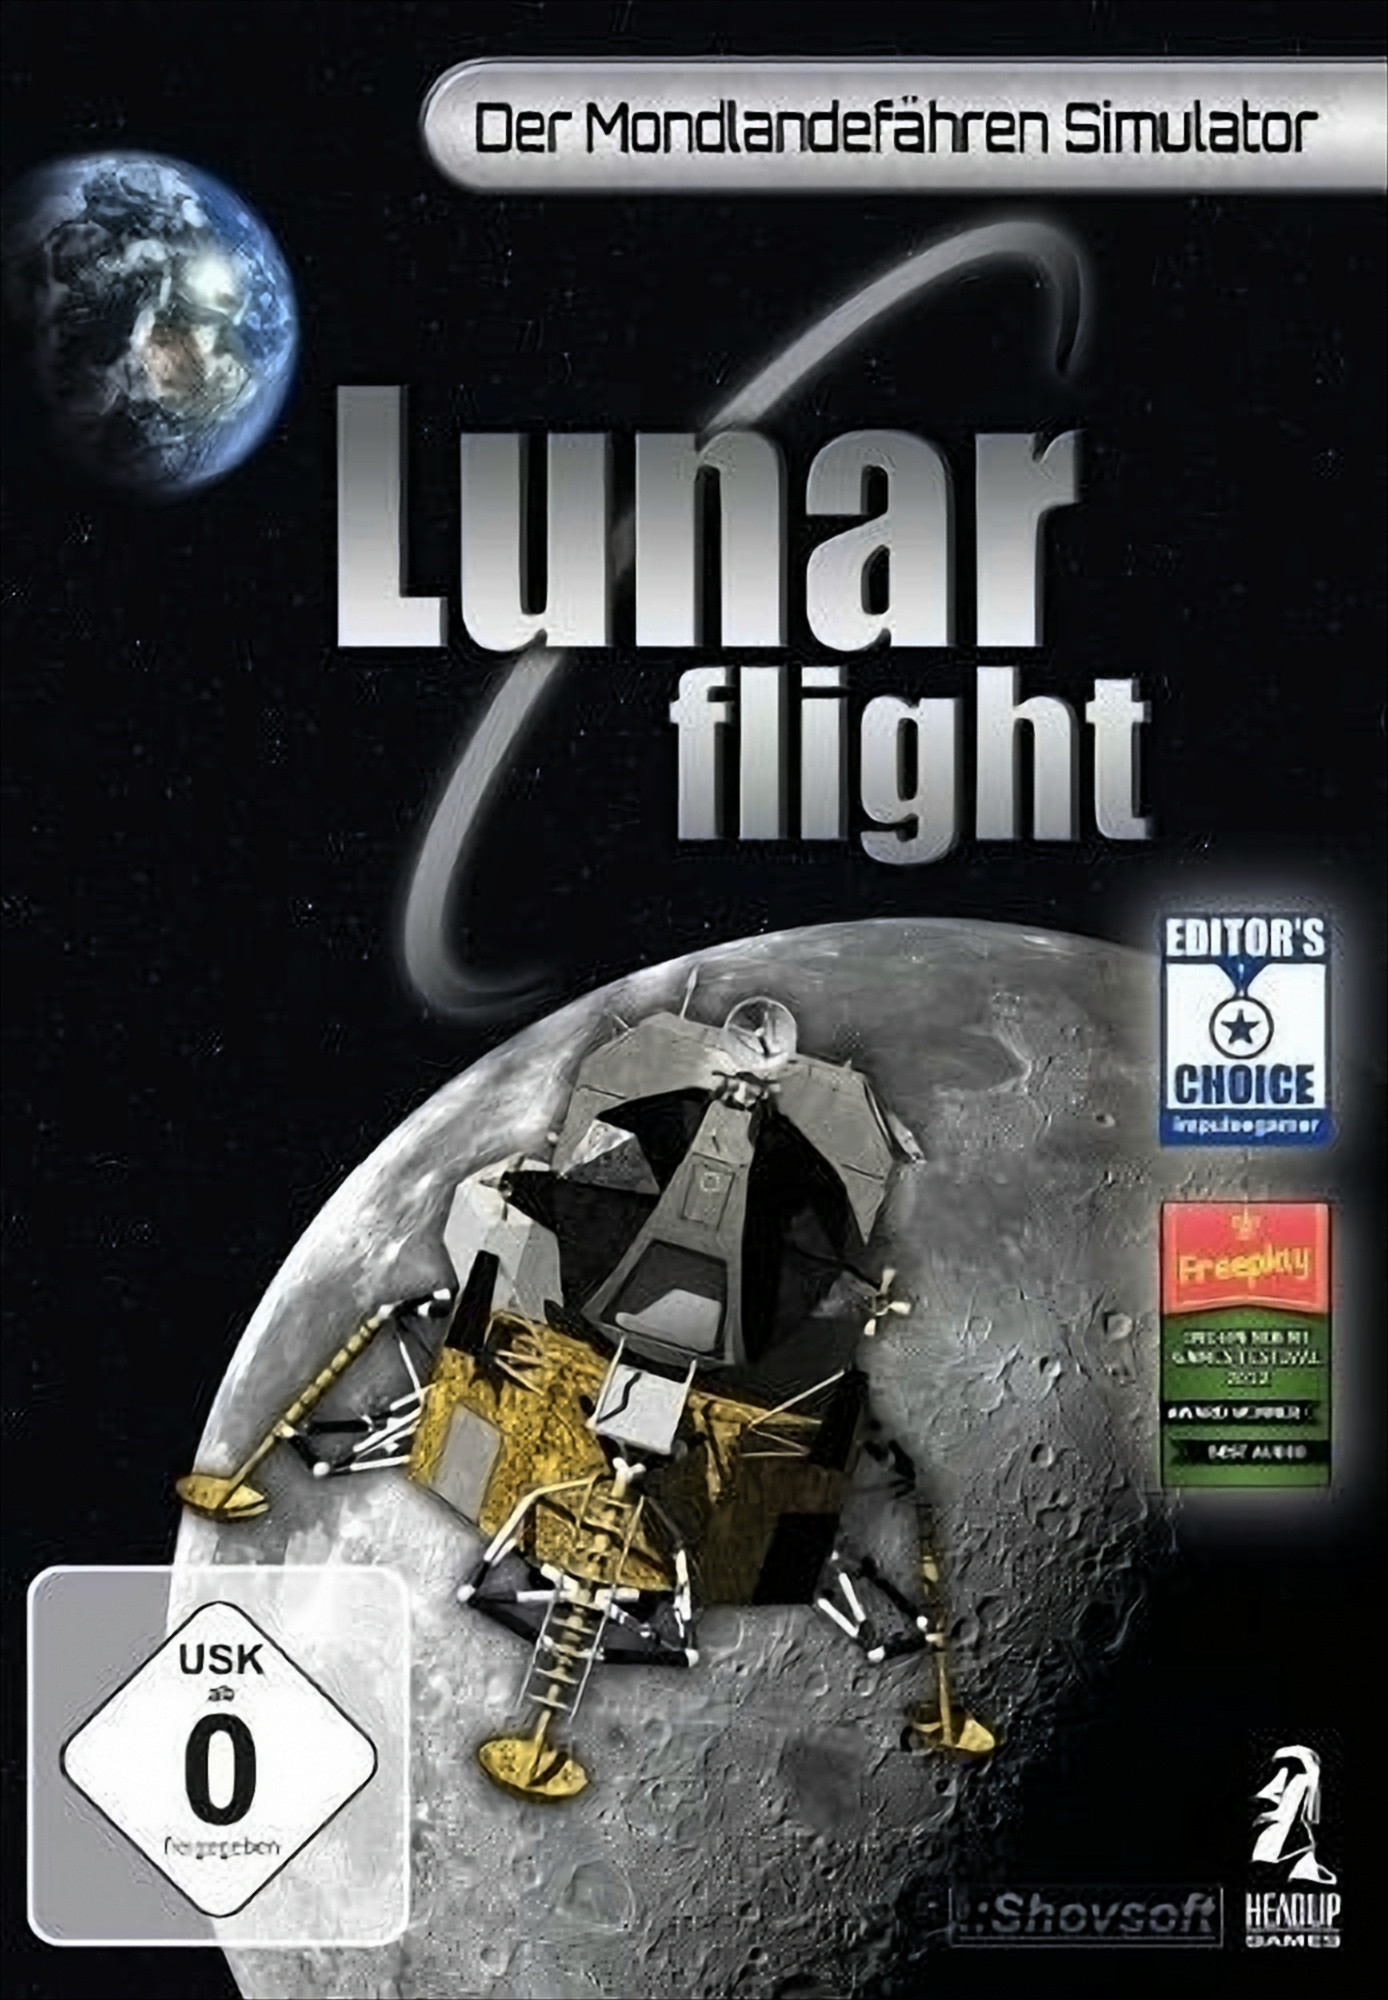 Mondlandefähren Lunar Der - Flight Simulator - [PC]